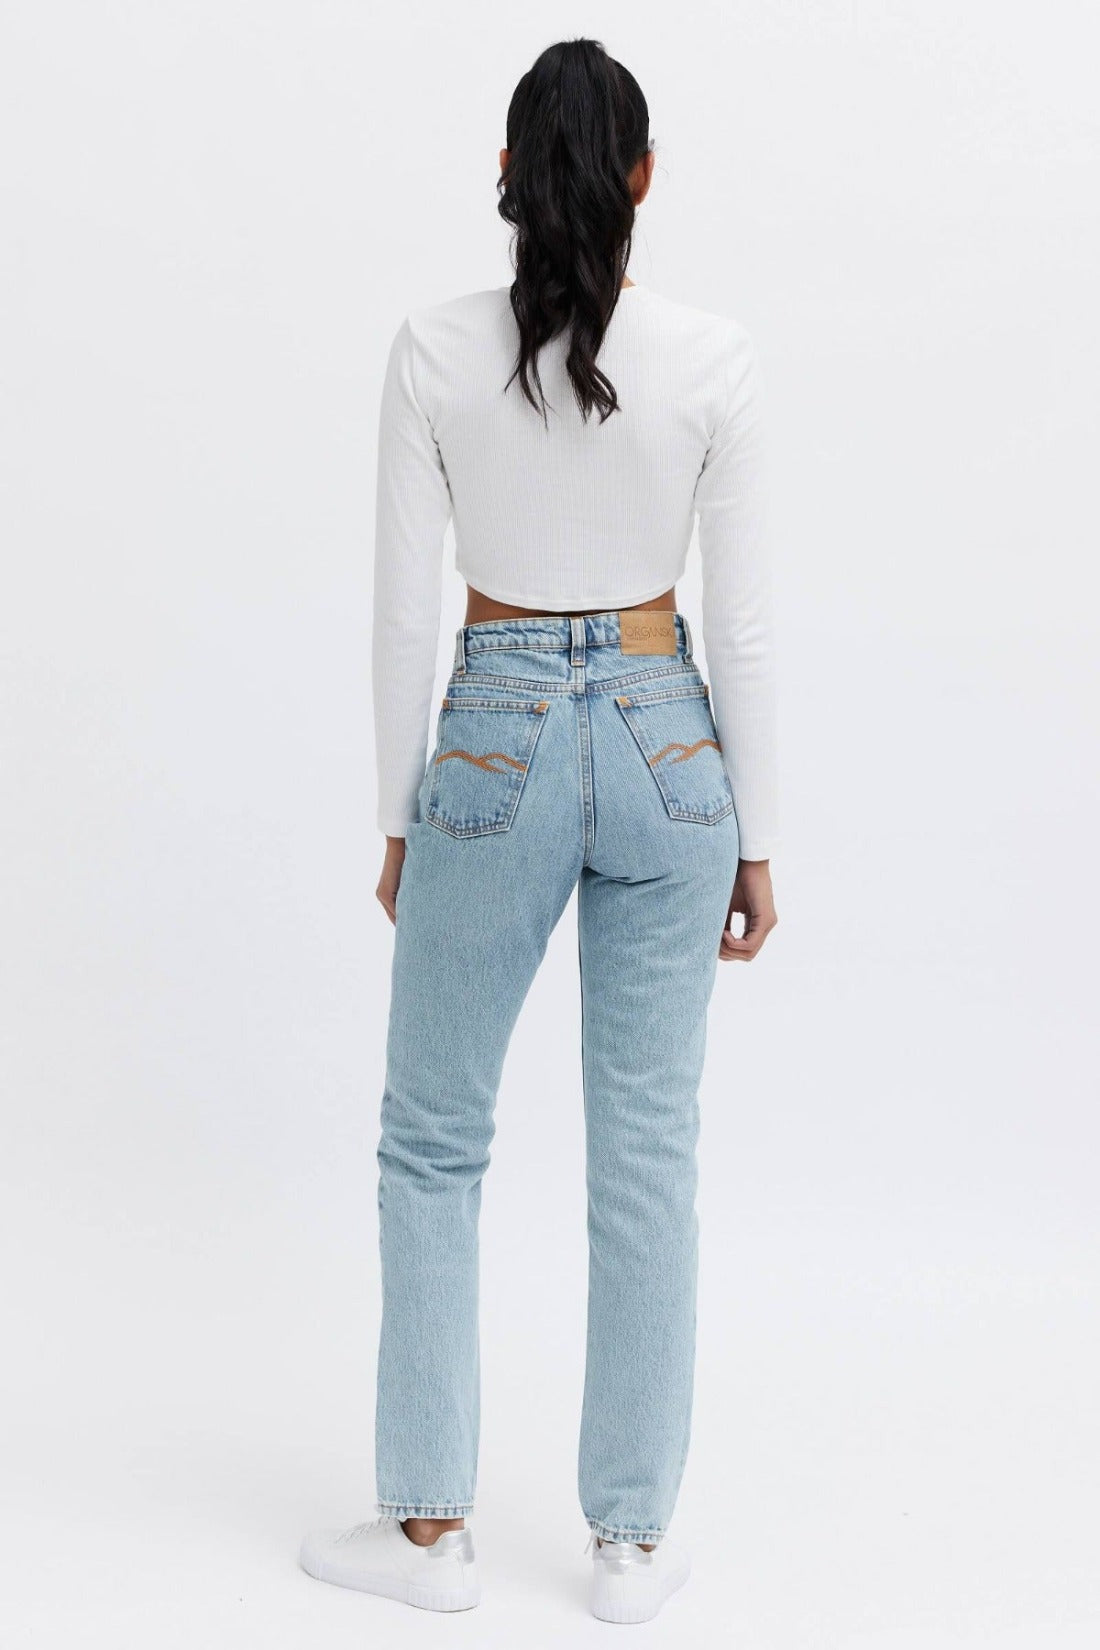 Lease Women's ethical denim jeans